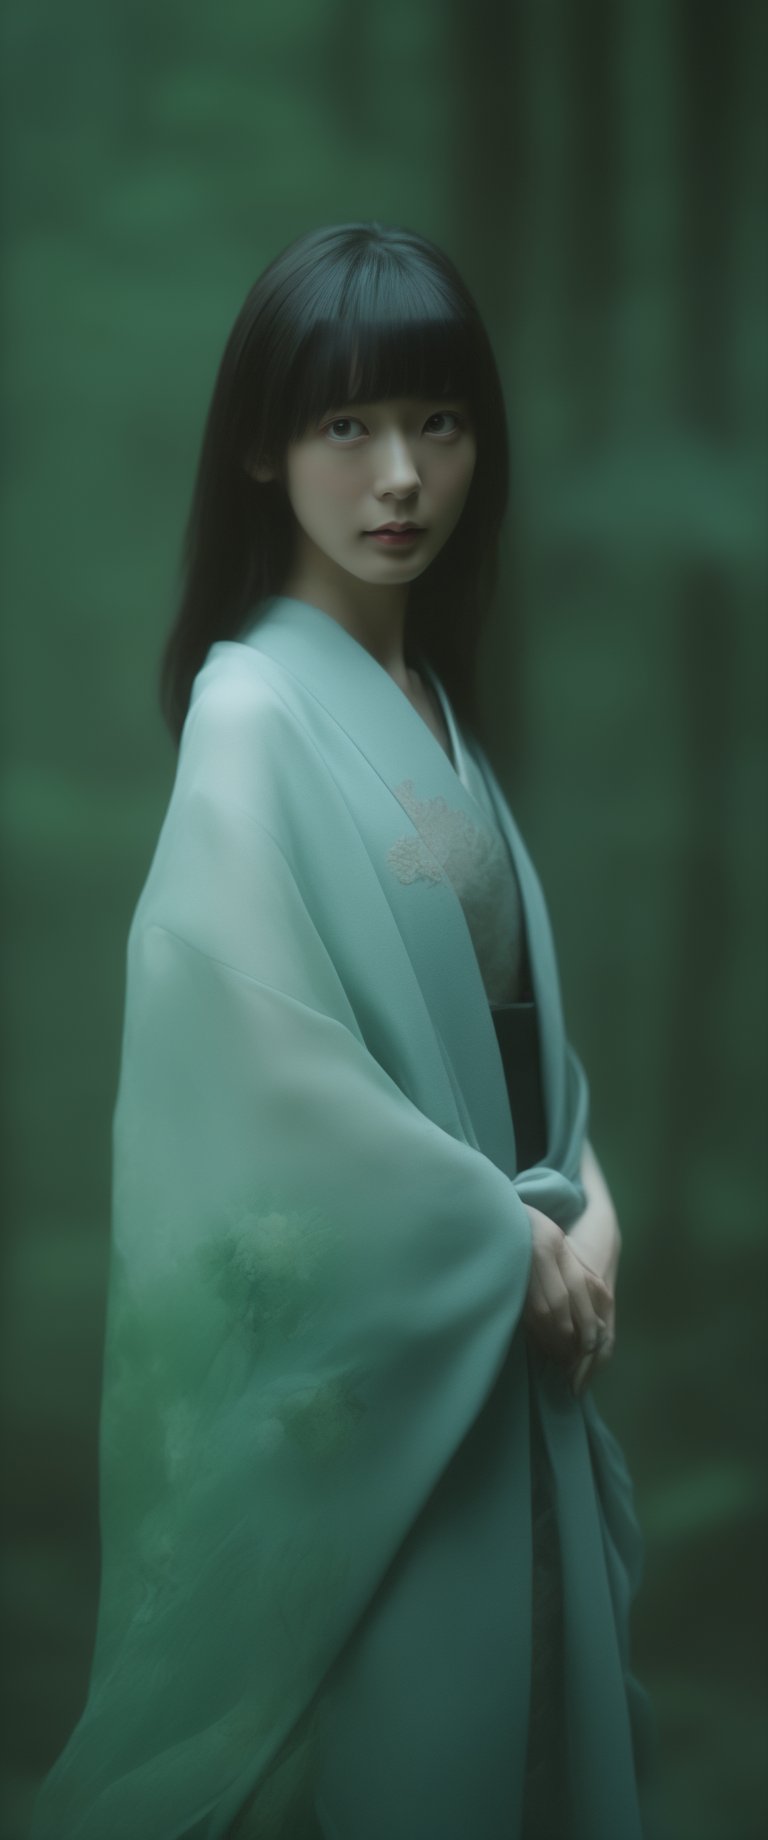 breathtaking  RAW photo of female ((Imagen arafed de una mujer con un vestido verde en un bosque., retrato geisha con flequillo, jingna zhang, heise-lian yan fang, Zhang Daqian, inspirado en Li Mei Shu, palacio , una chica en hanfu, retrato de pintura mate, retrato de Sadako del Anillo, retrato de un mago del bosque, inspirado en Zhou Wenjing

 )), dark and moody style, perfect face, outstretched perfect hands . masterpiece, professional, award-winning, intricate details, ultra high detailed, 64k, dramatic light, volumetric light, dynamic lighting, Epic, splash art .. ), by james jean $, roby dwi antono $, ross tran $. francis bacon $, michal mraz $, adrian ghenie $, petra cortright $, gerhard richter $, takato yamamoto $, ashley wood, tense atmospheric, , , , sooyaaa,IMGFIX,Comic Book-Style,Movie Aesthetic,action shot,photo r3al,bad quality image,oil painting, cinematic moviemaker style,Japan Vibes,H effect,koh_yunjung ,koh_yunjung,kwon-nara,sooyaaa,colorful,bones,skulls,armor,han-hyoju-xl
,DonMn1ghtm4reXL, ct-fujiii